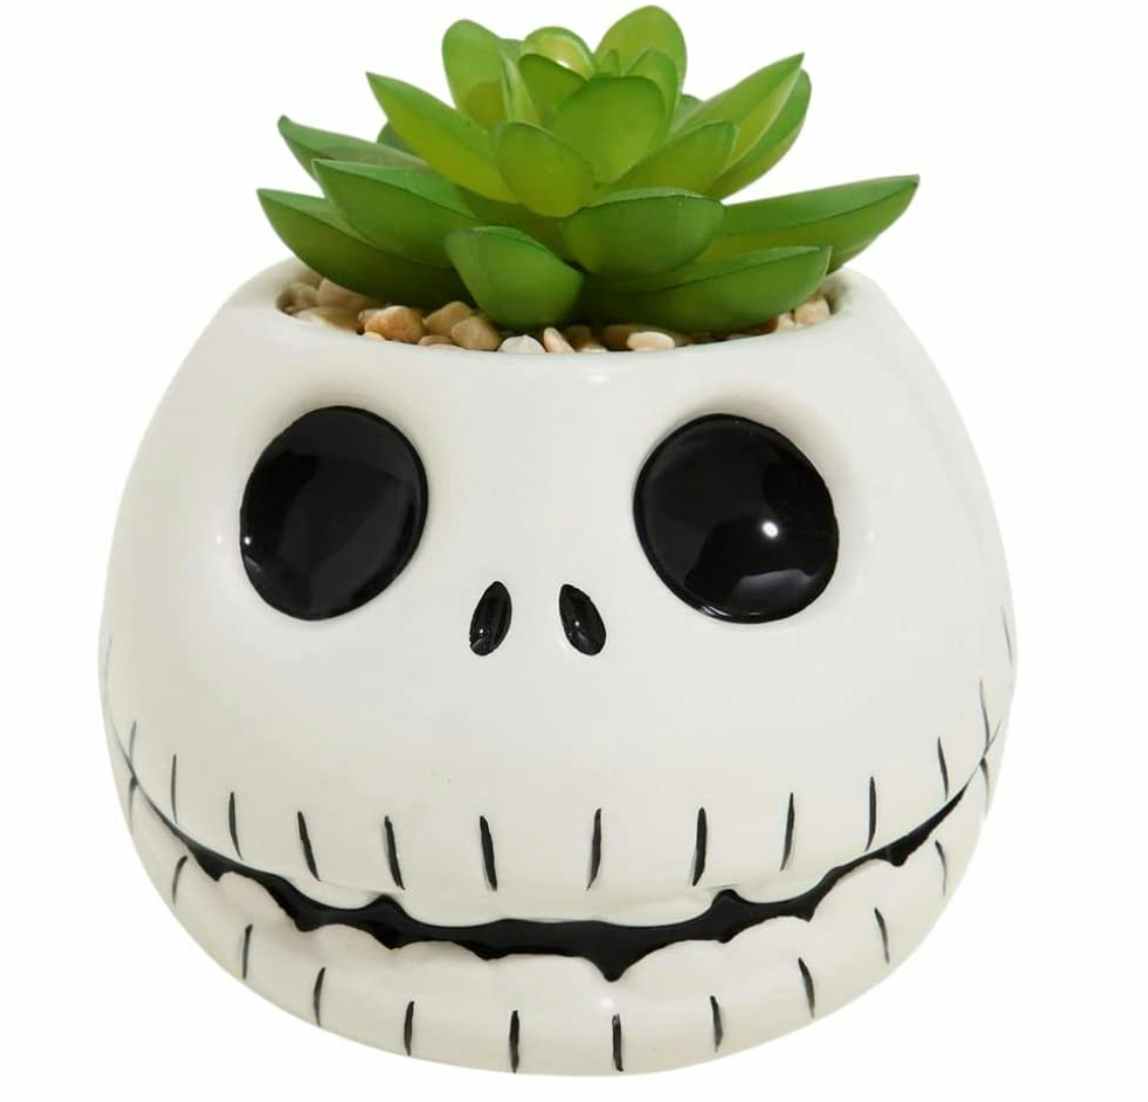 Jack skeleton planter with a faux succulent 